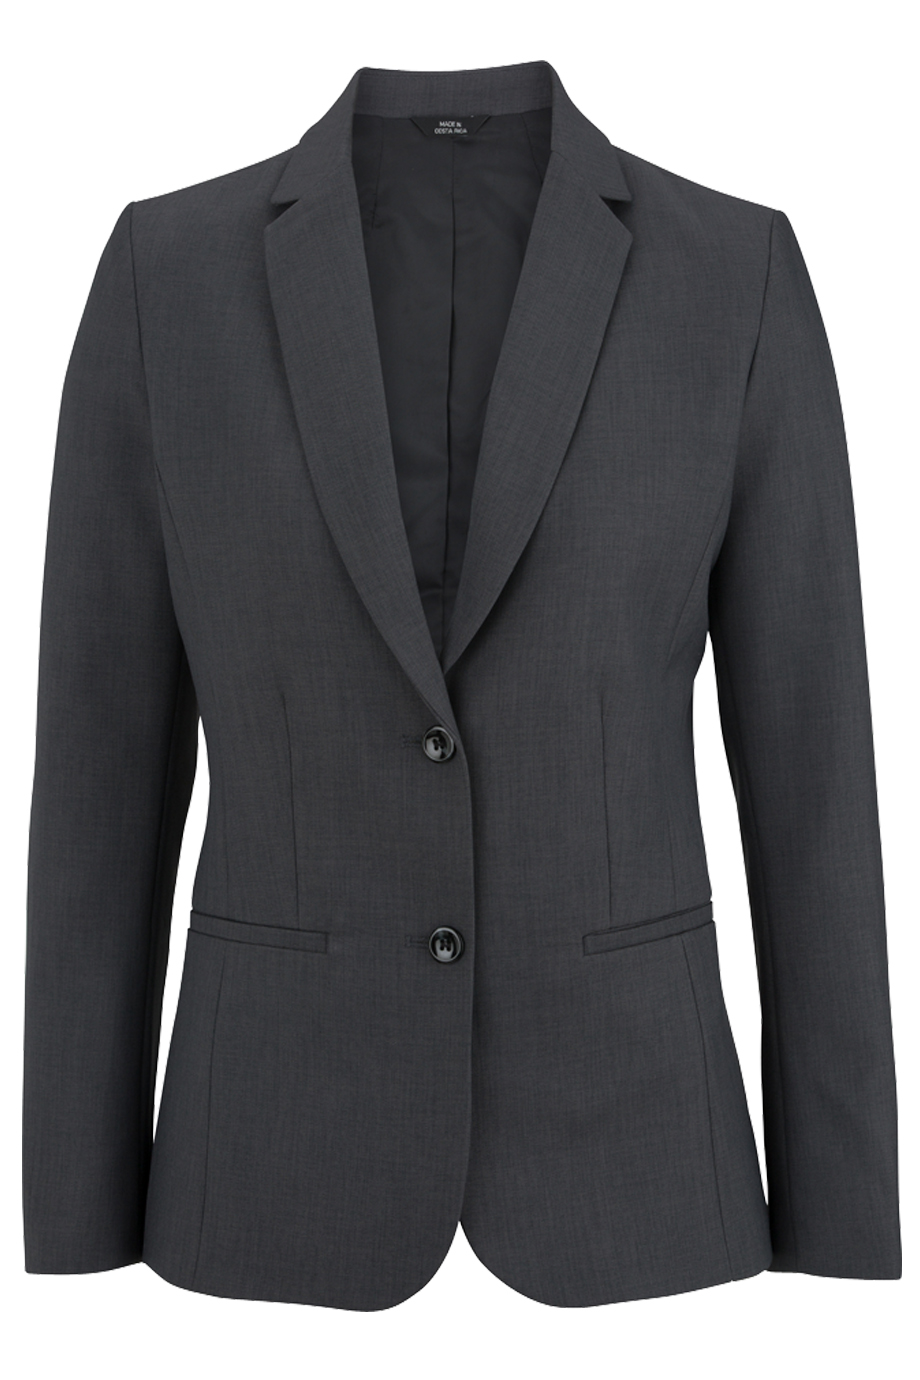 Ladies' Synergy Washable Suit Coat - Longer Length 6575